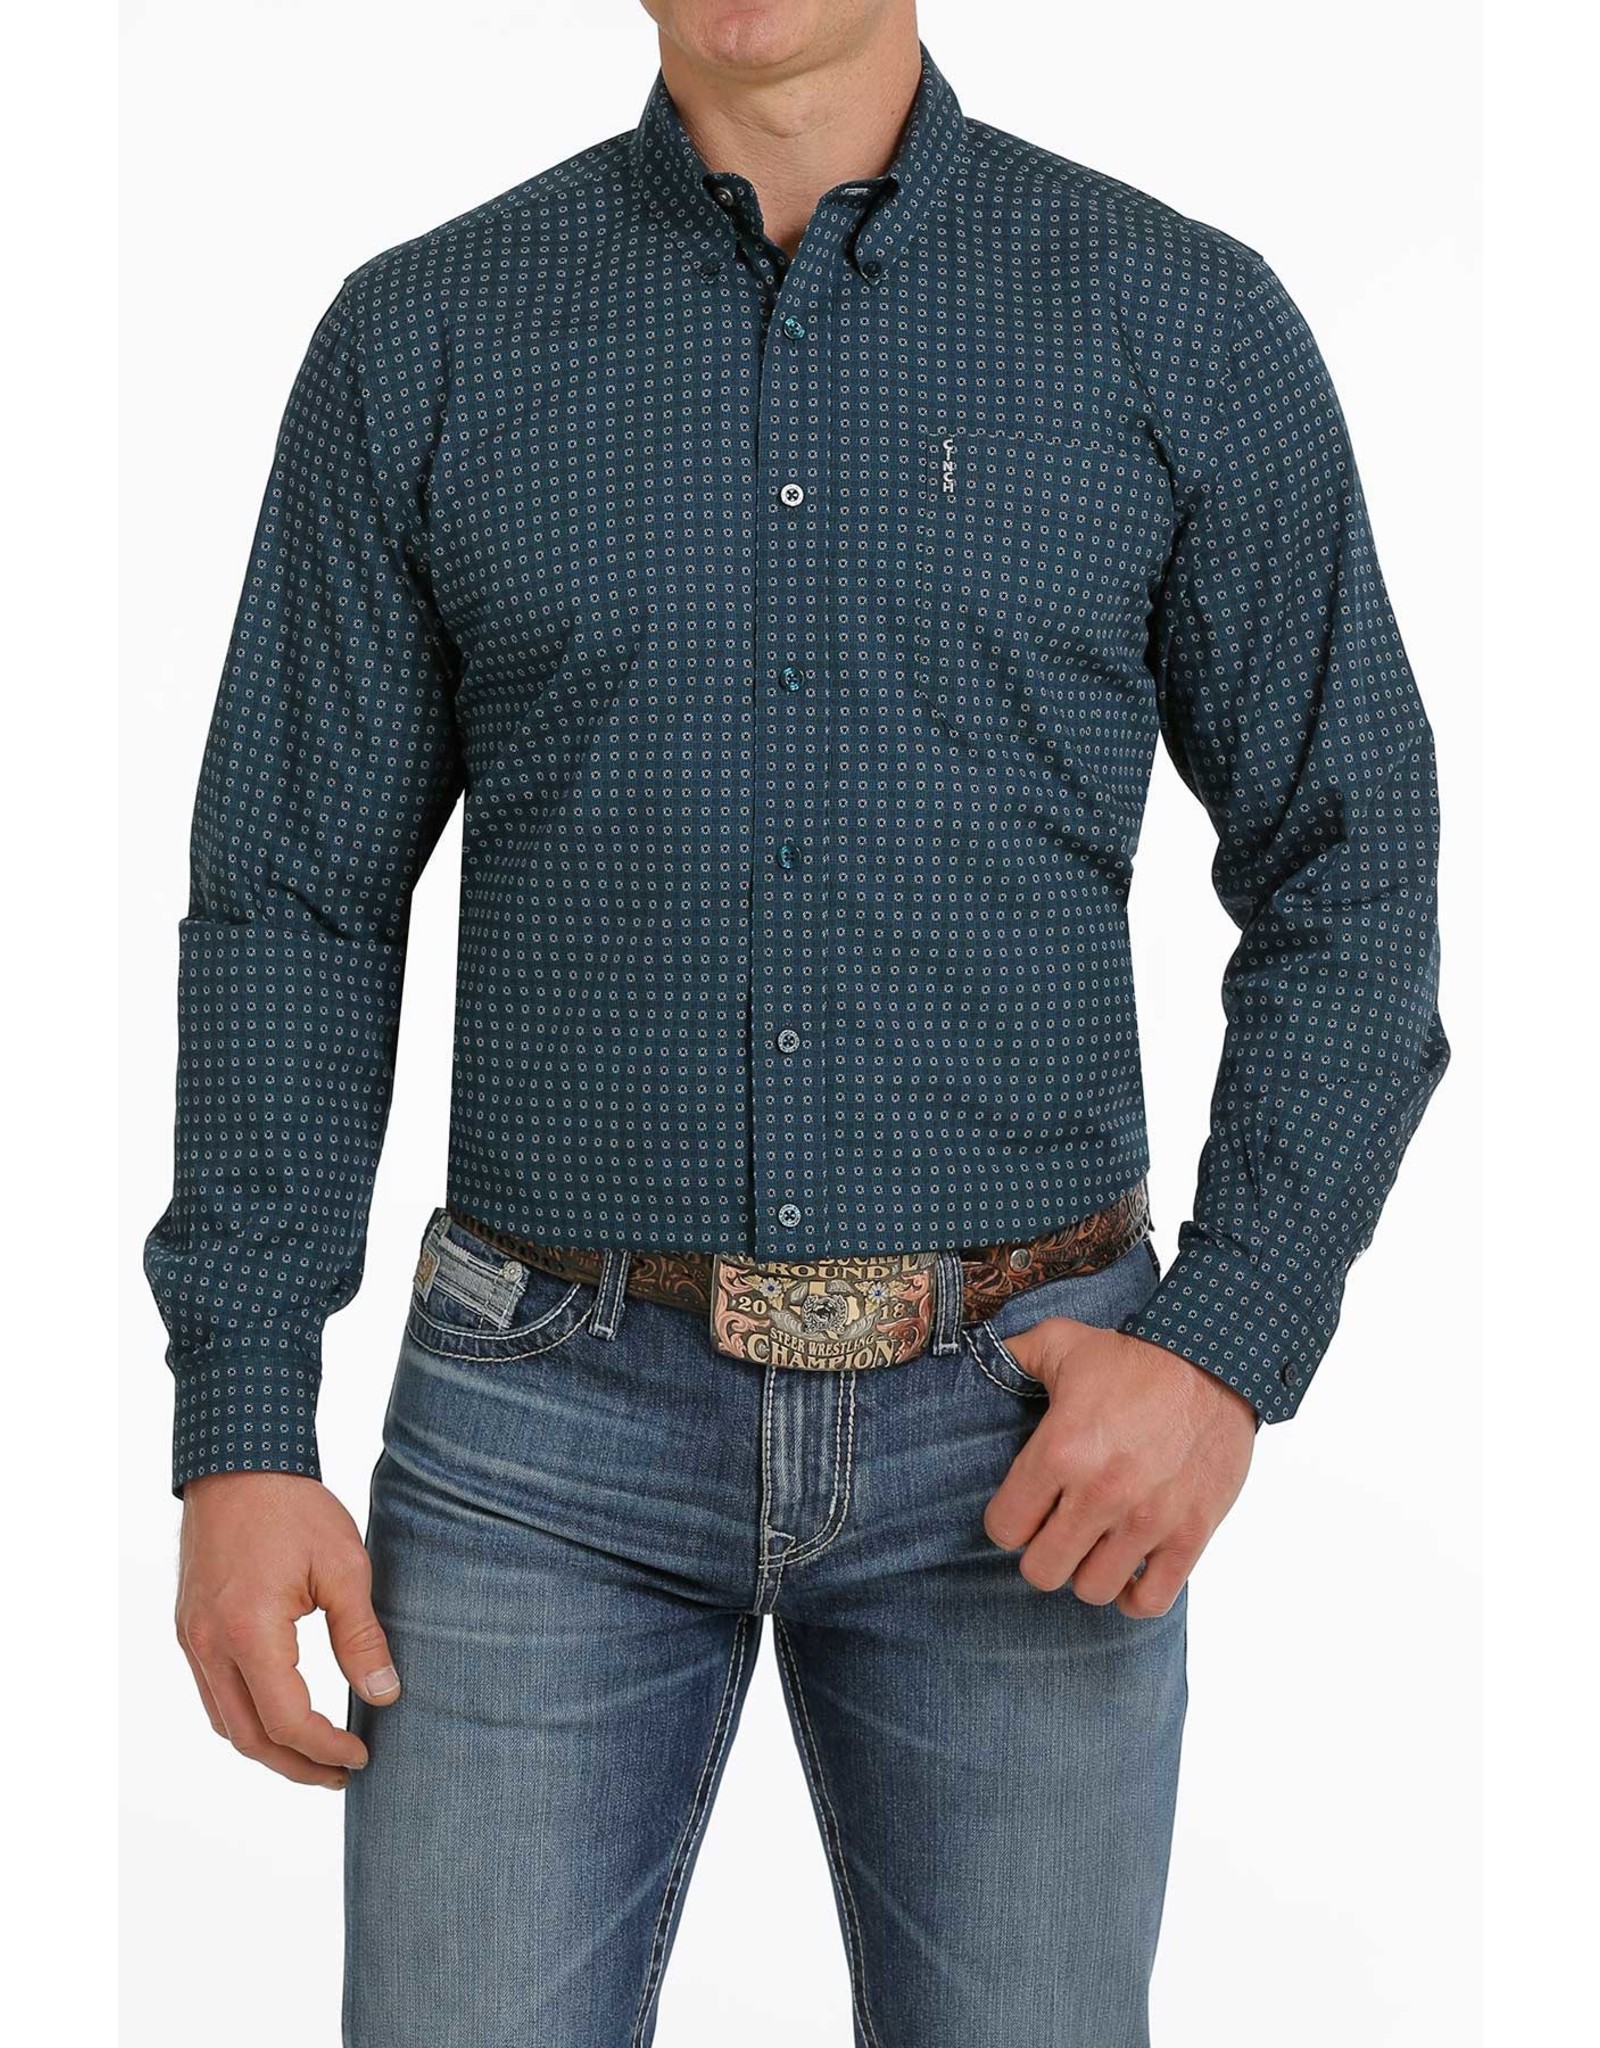 Cinch Men's Modern Fit Teal Geo Fit MTW347035 Western Button Up Shirt